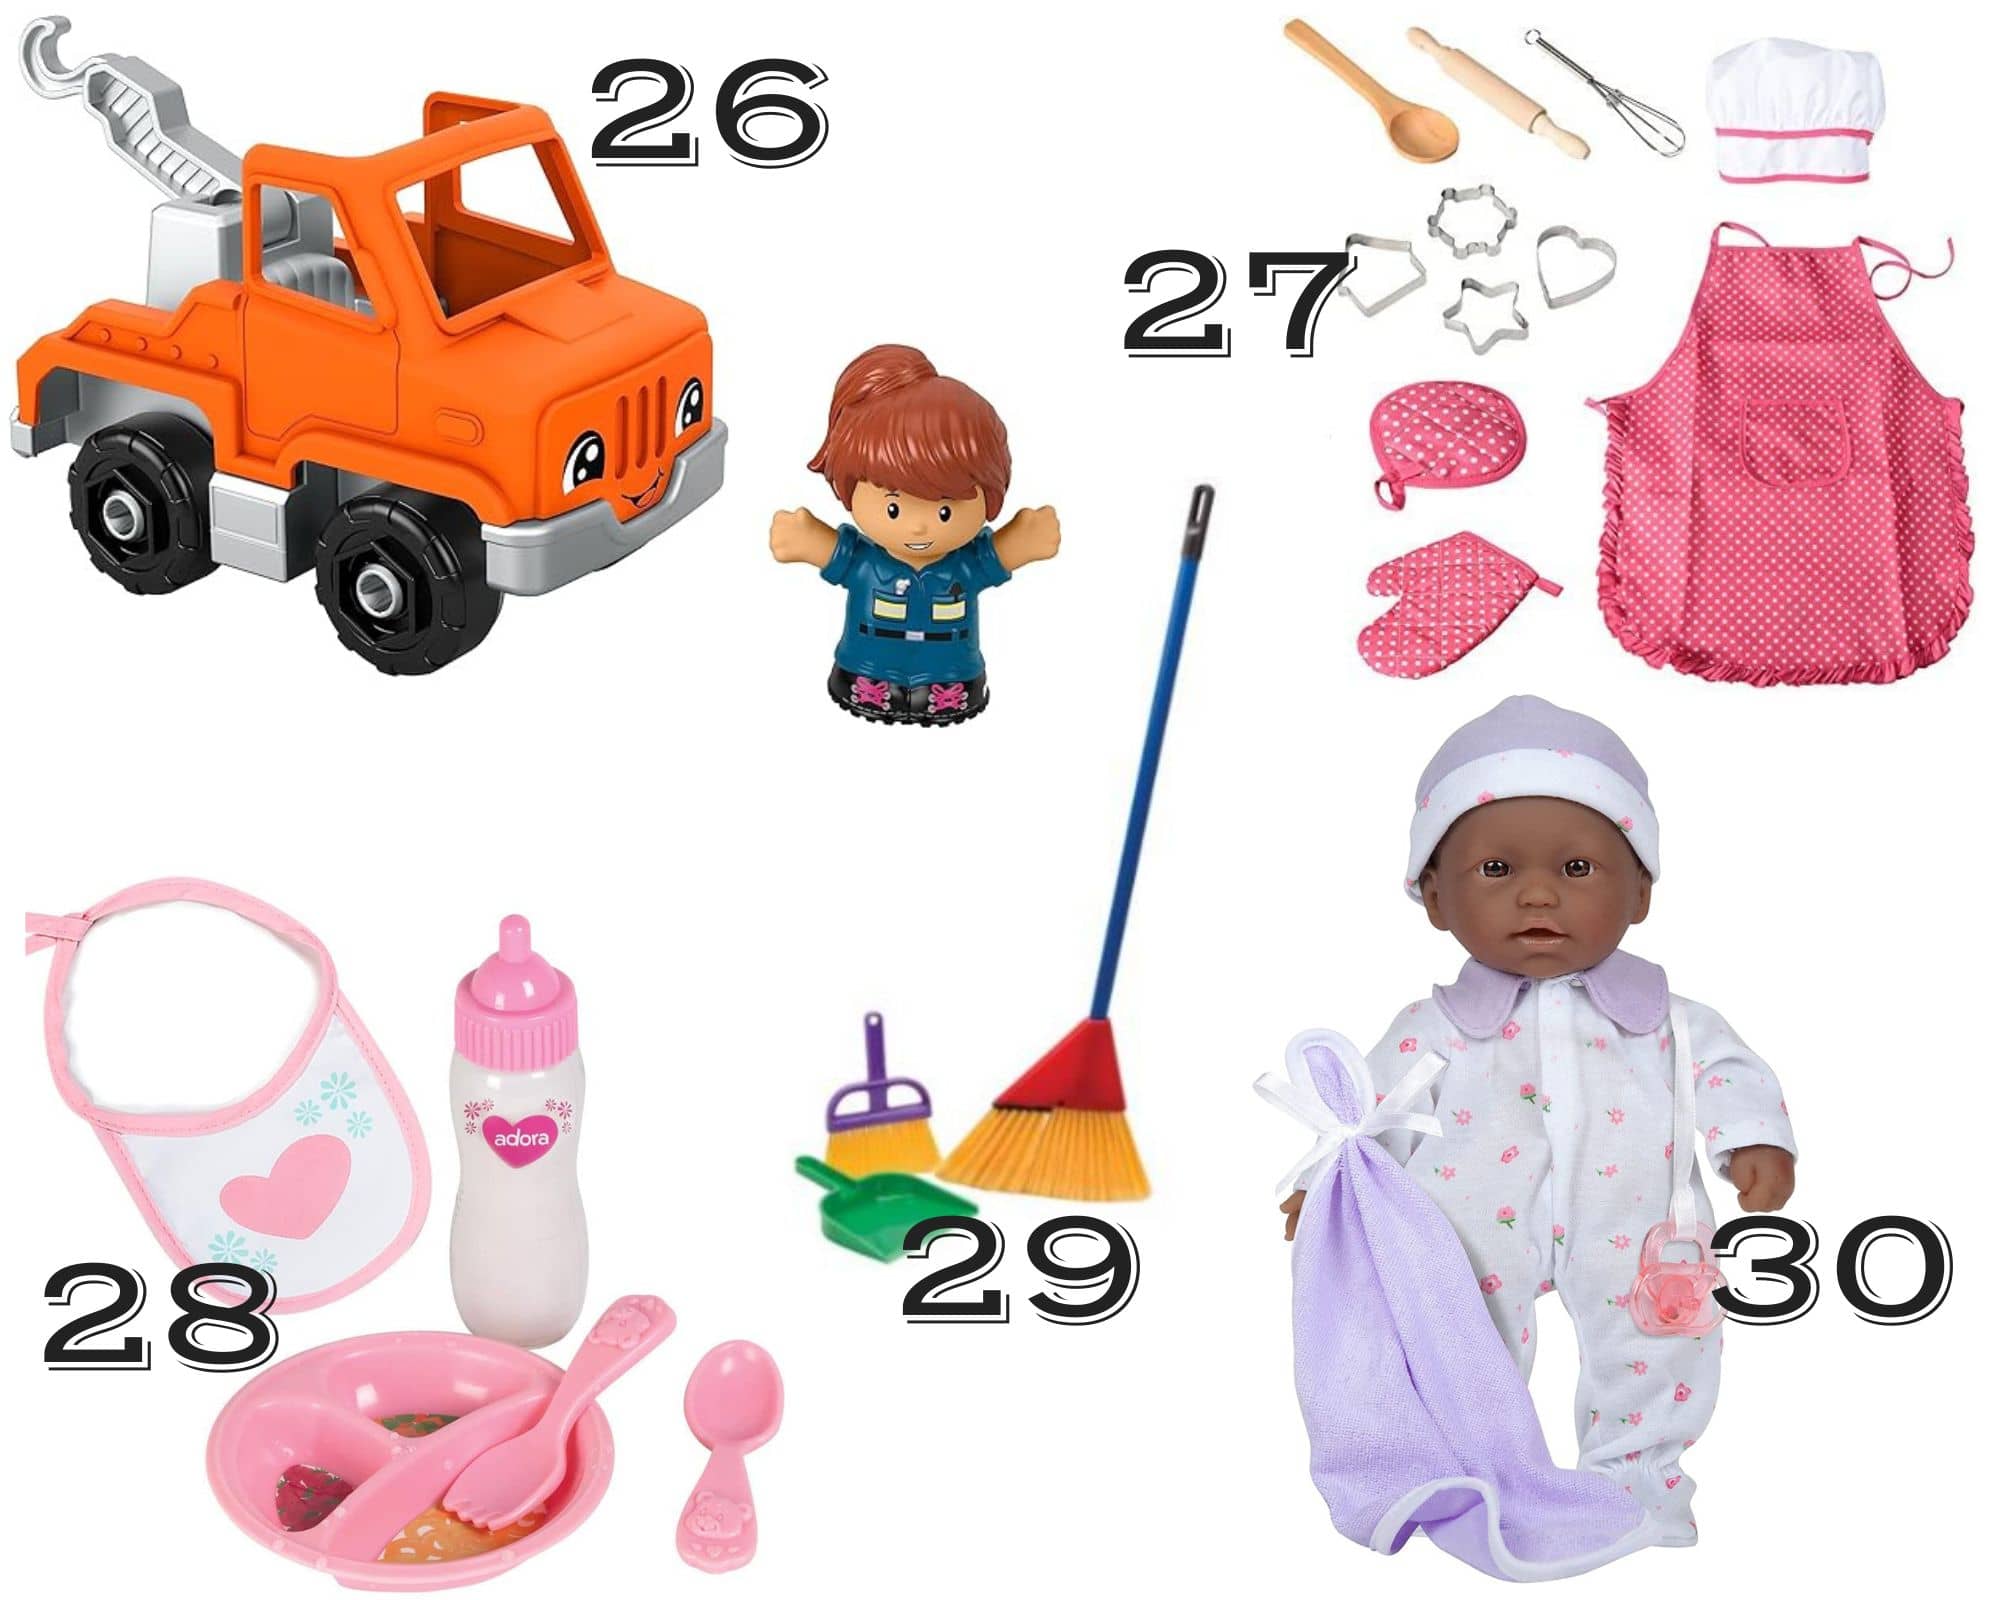 https://www.thriftyfrugalmom.com/wp-content/uploads/2022/09/Cheap-birthday-gifts-ideas-for-kids.jpg